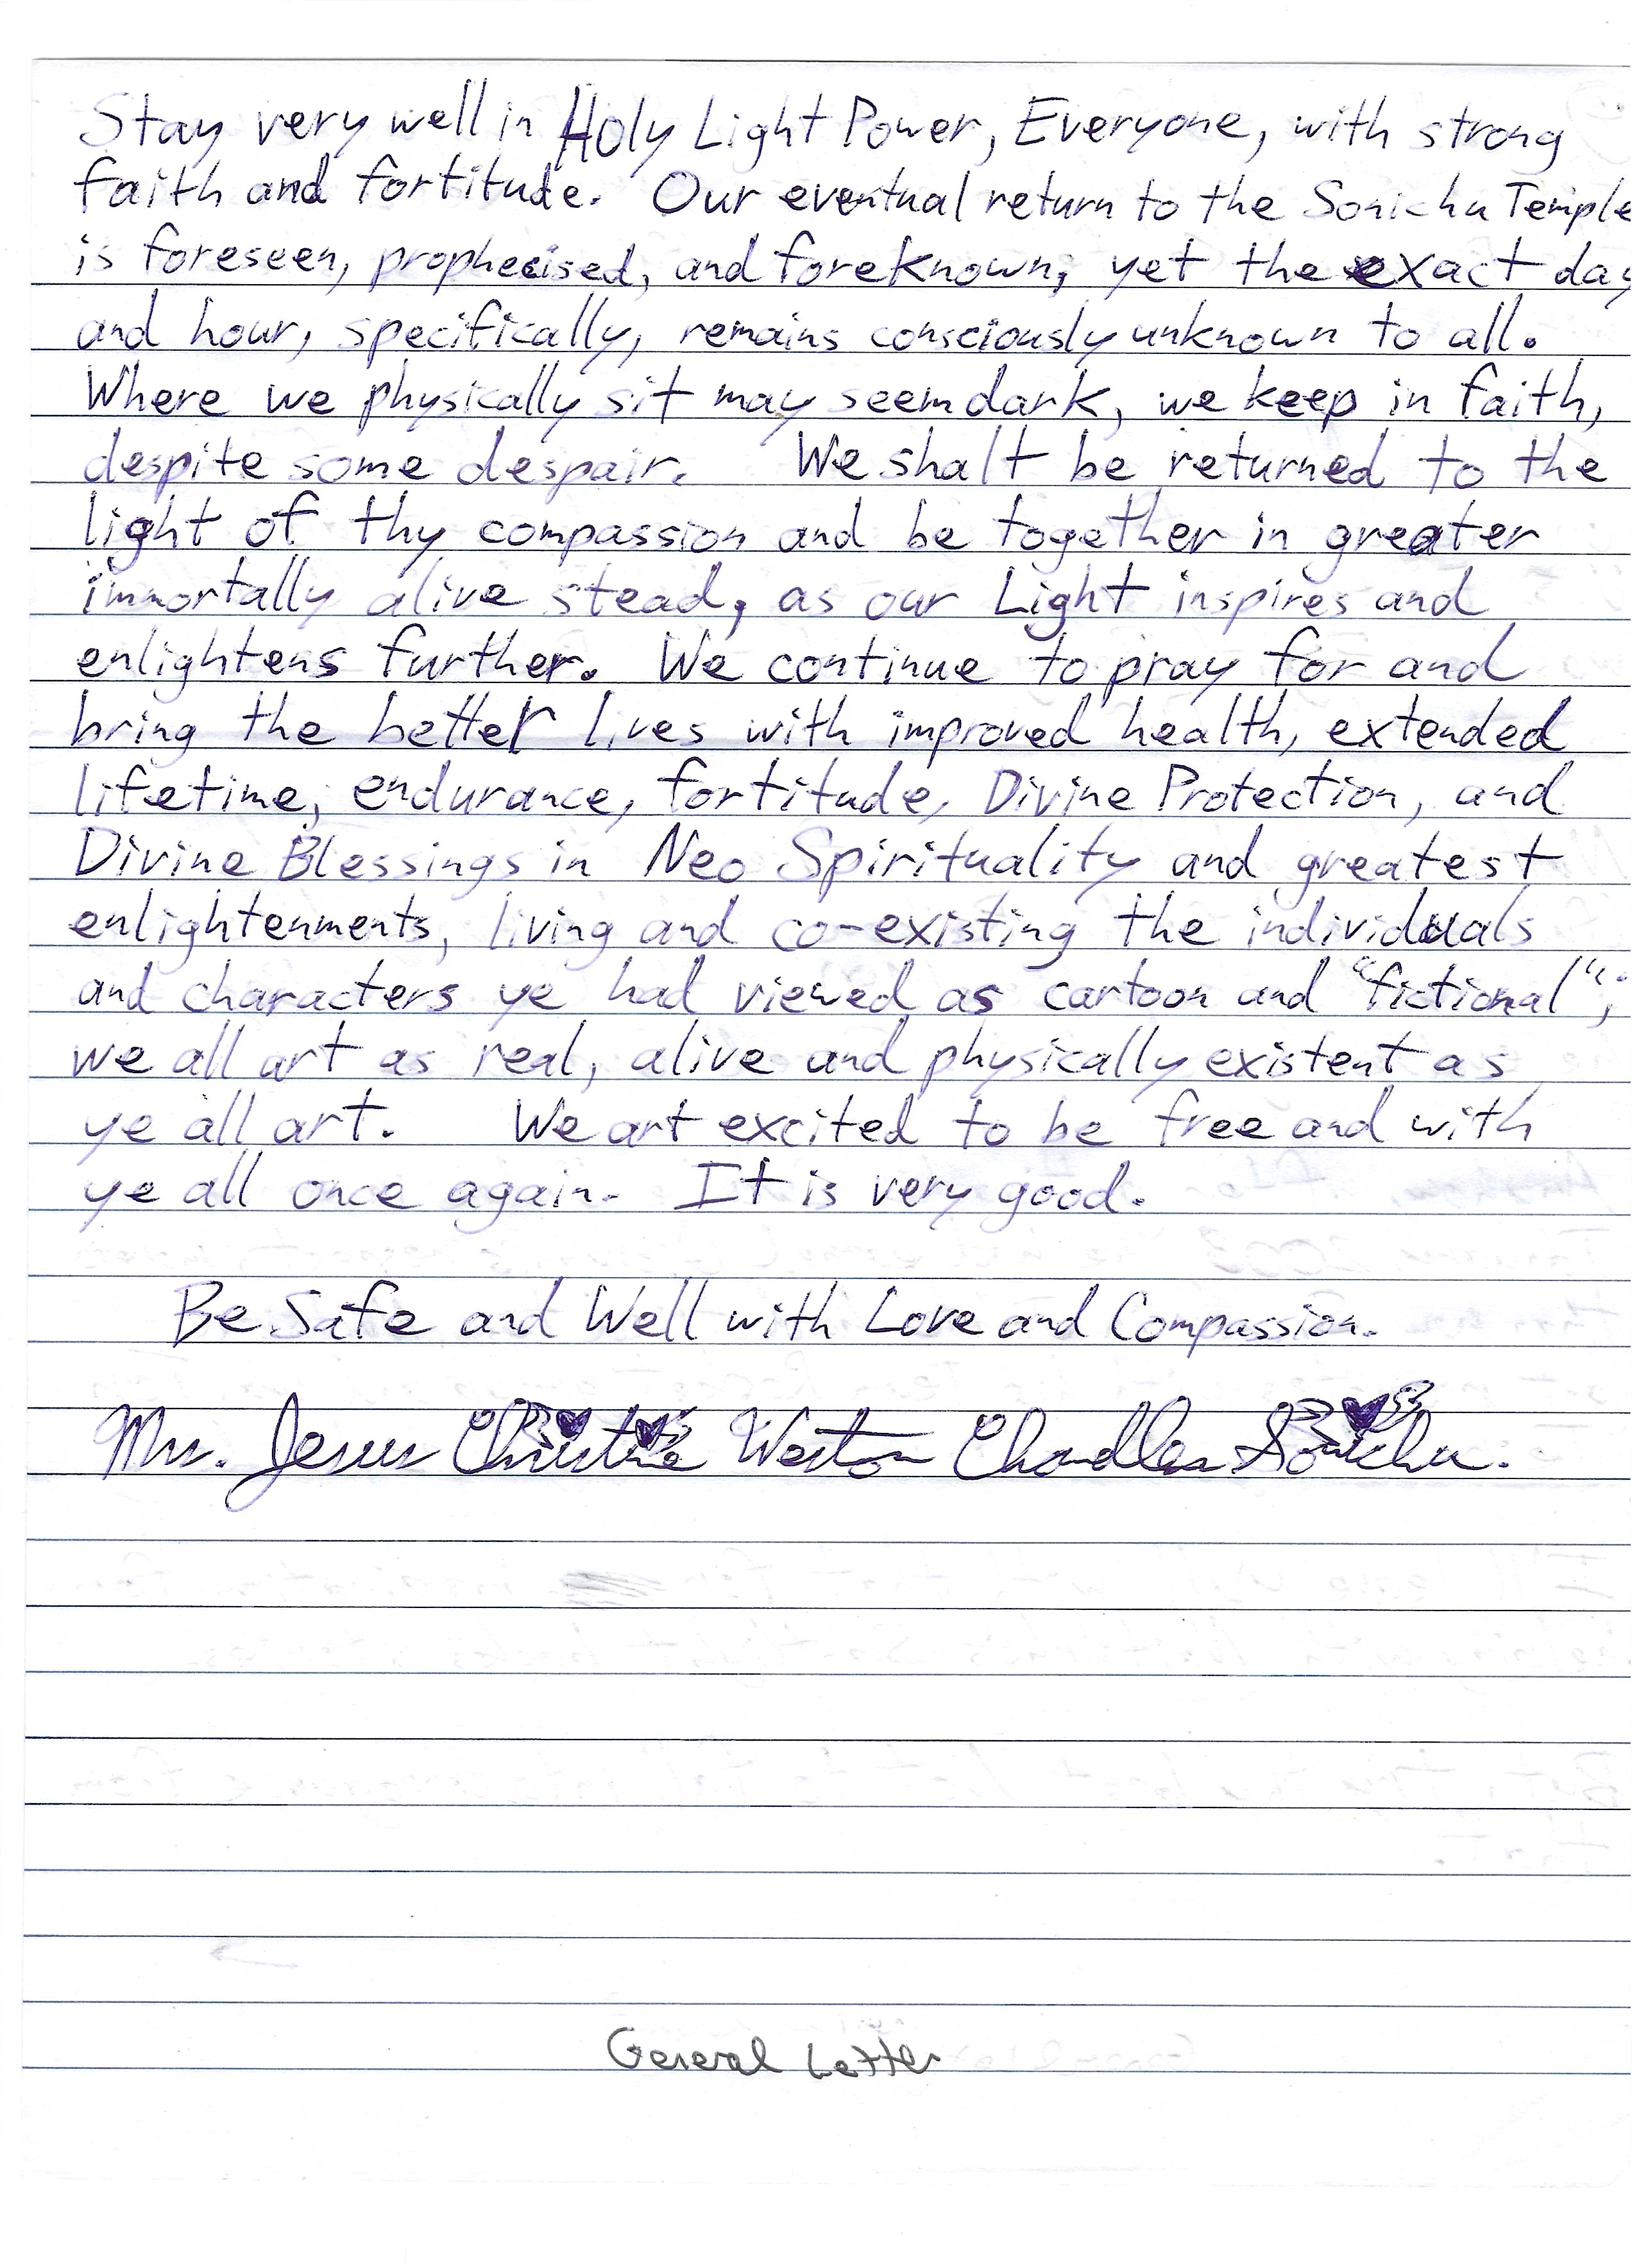 General Letter Page 8.jpg